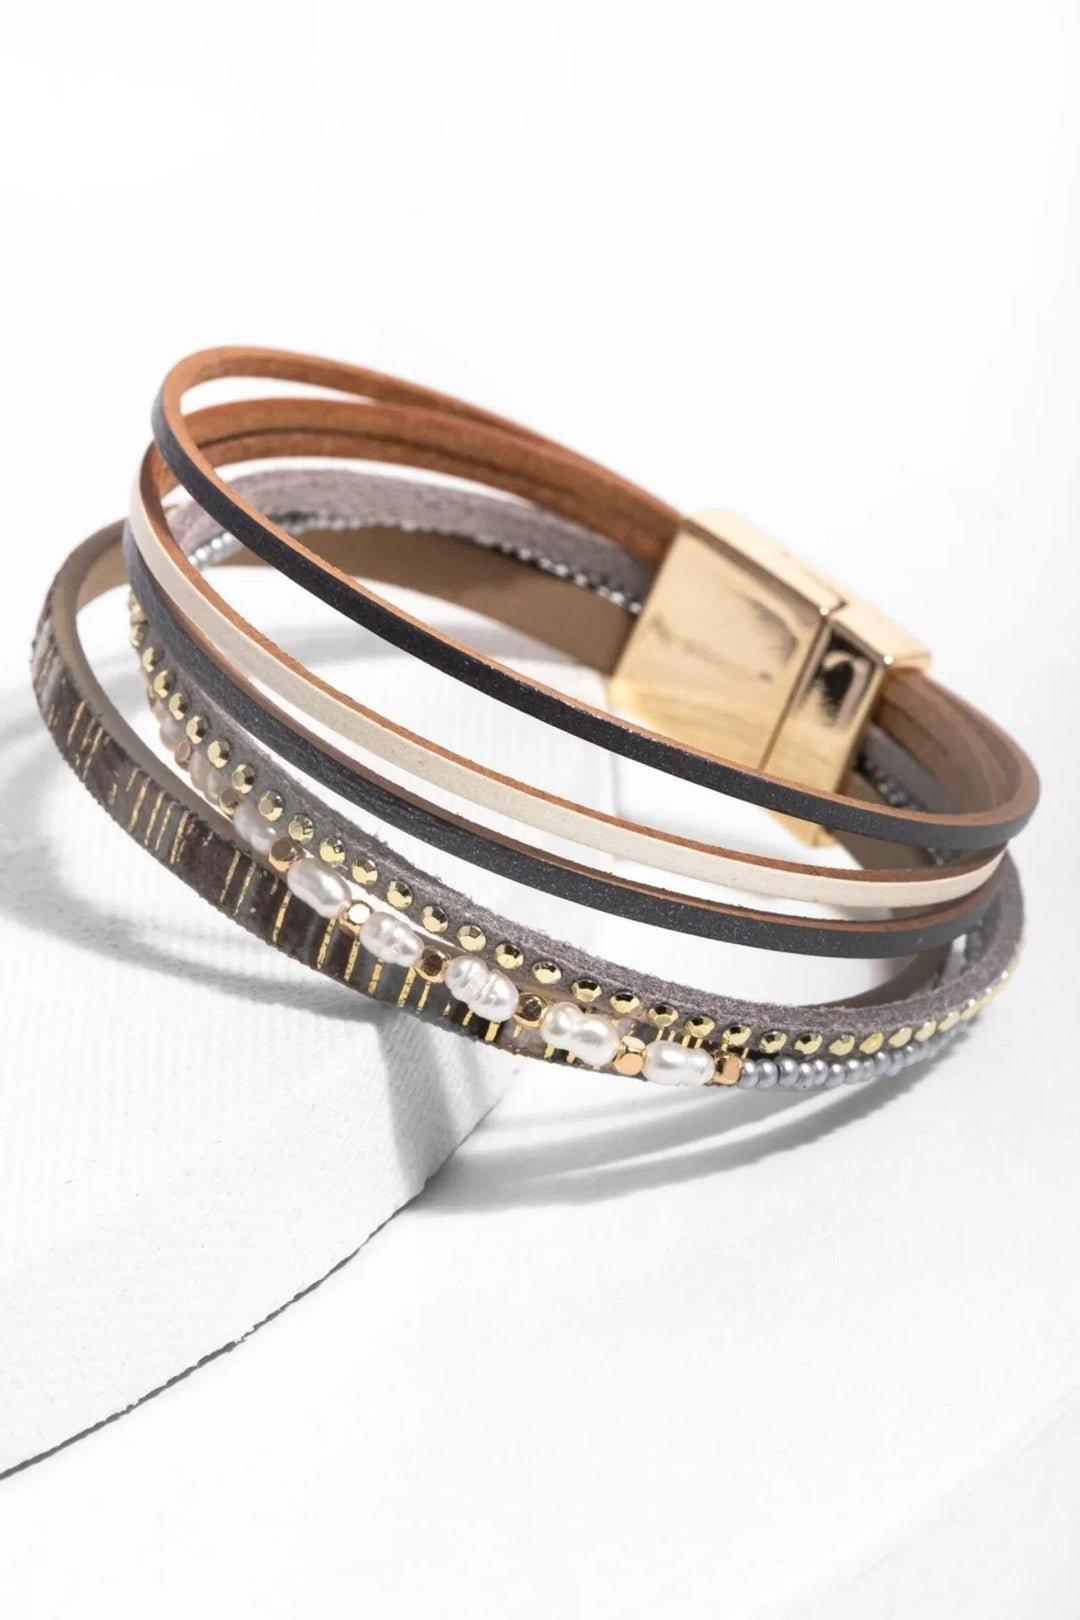 Curacao Beaded Bracelet - SAACHI - Dim Gray - Bracelet